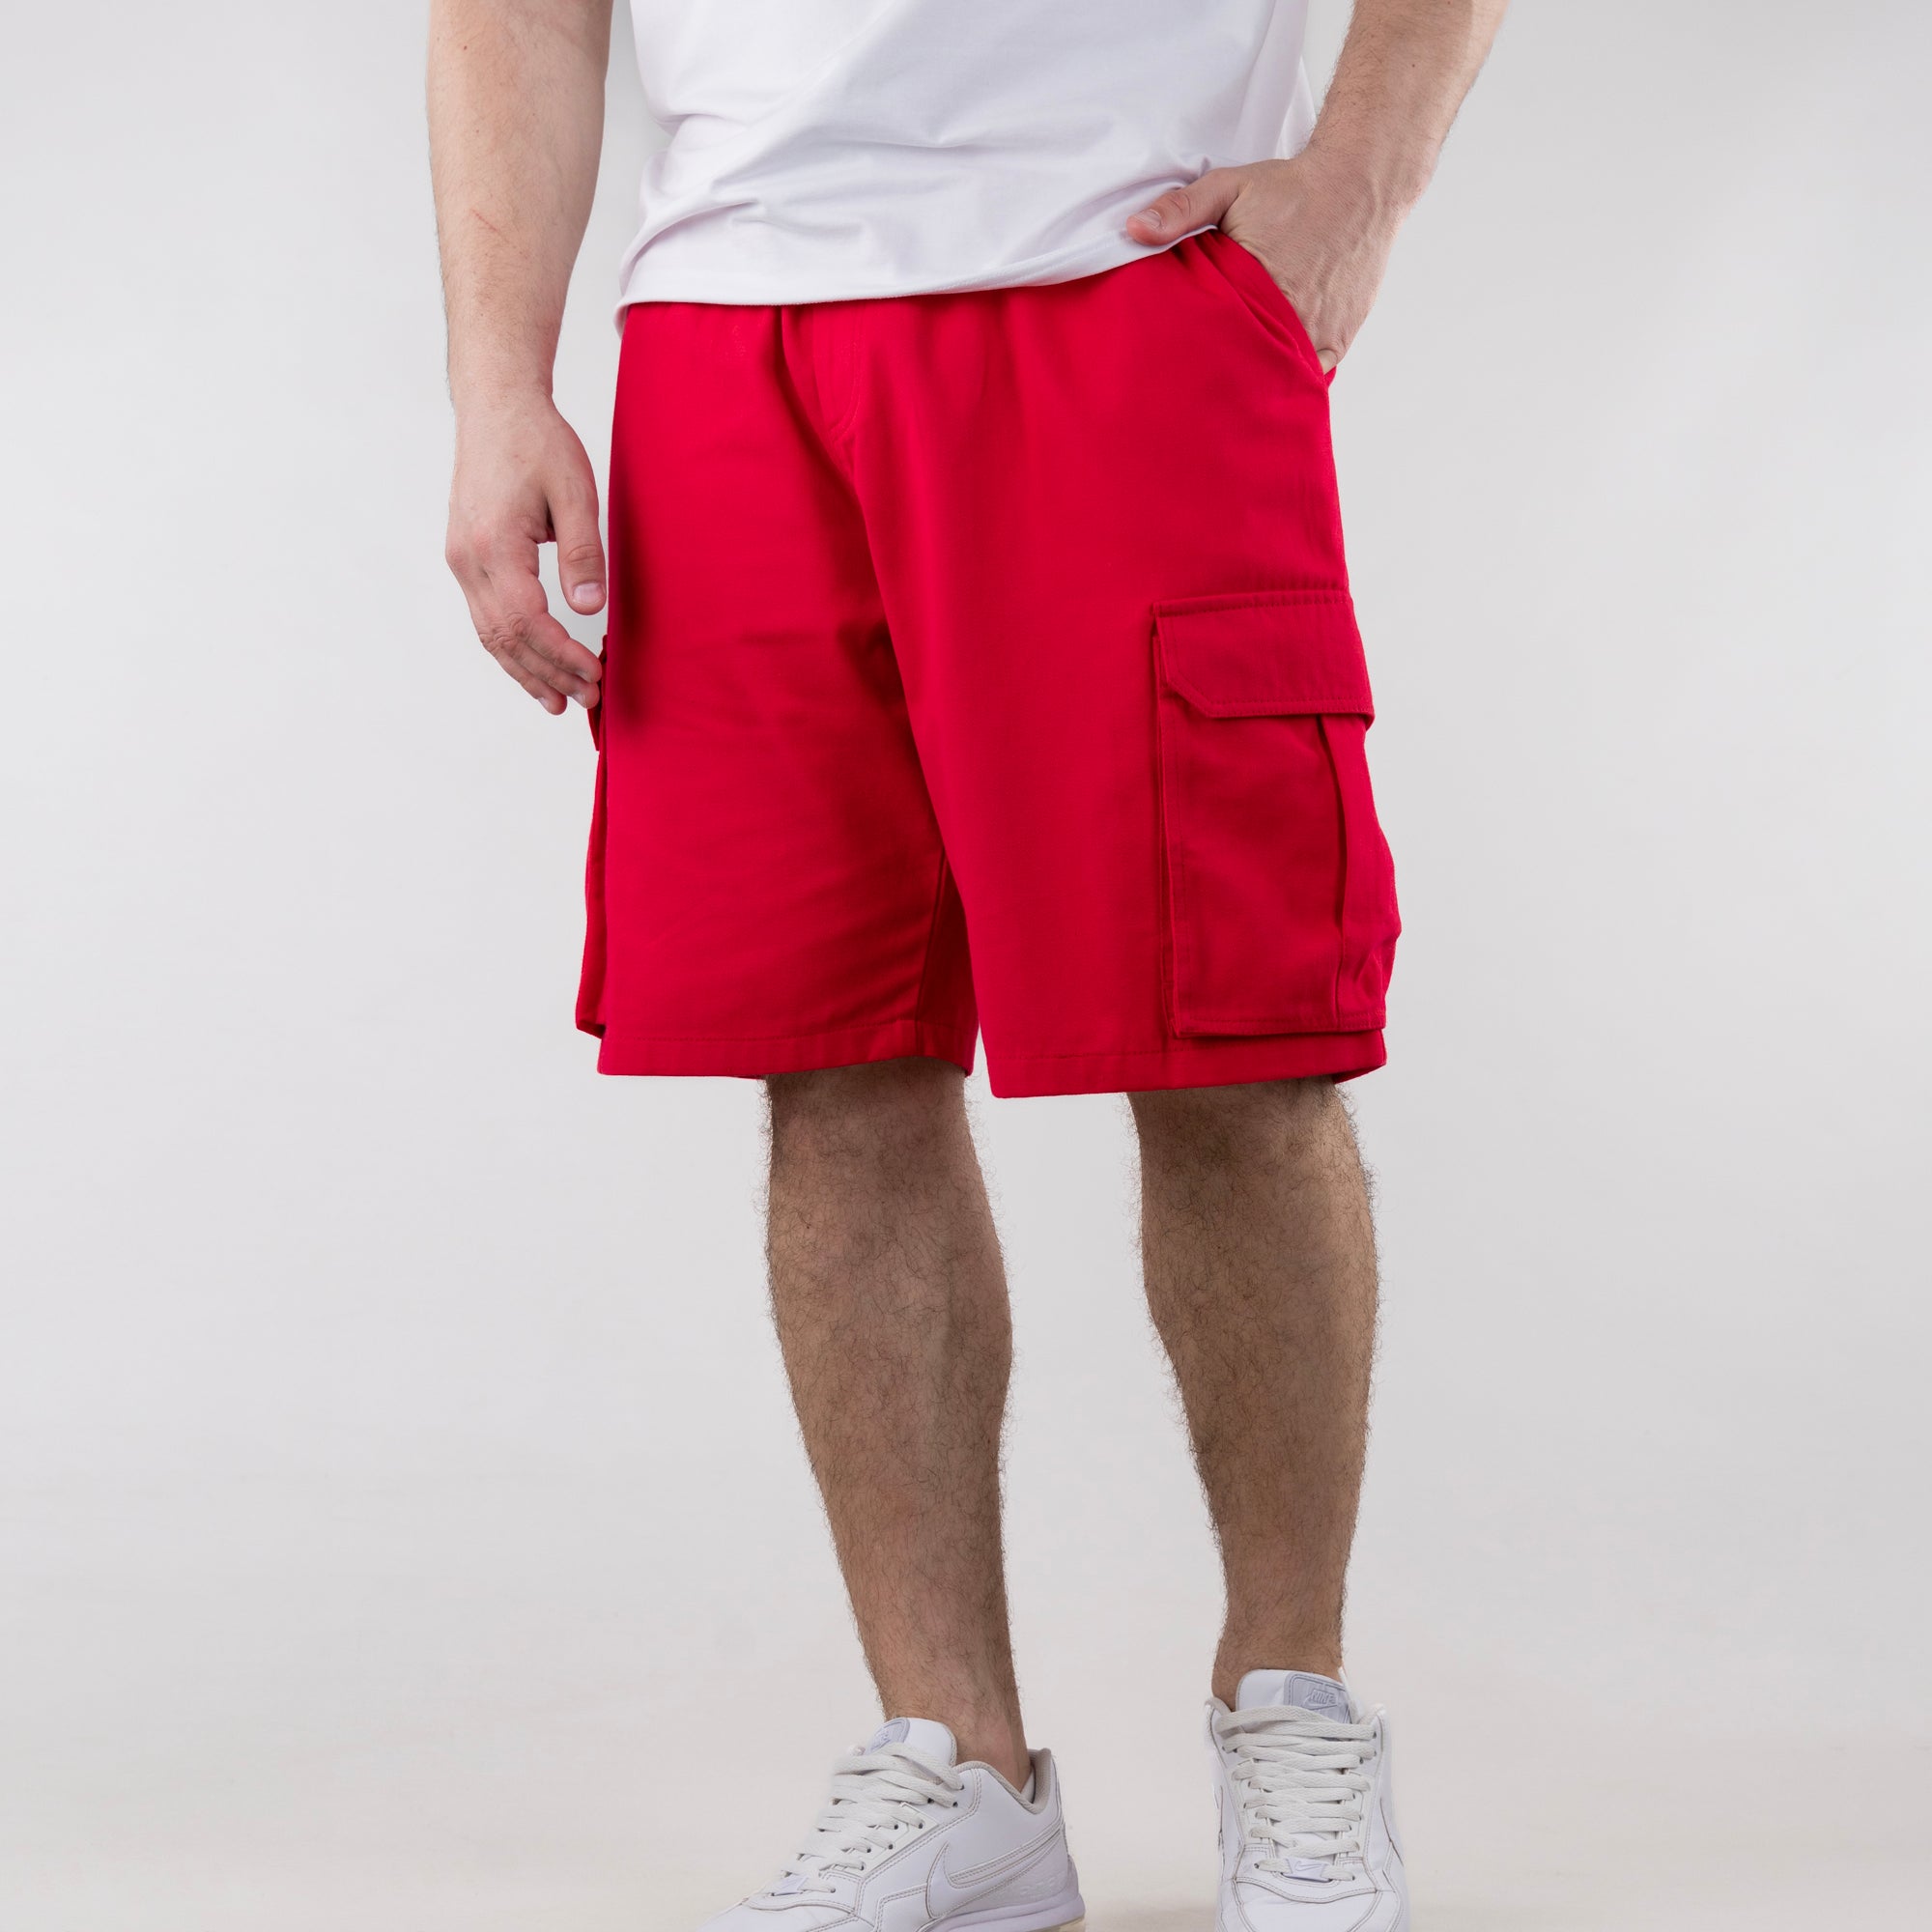 Men's Cargo Shorts, Casual Shorts